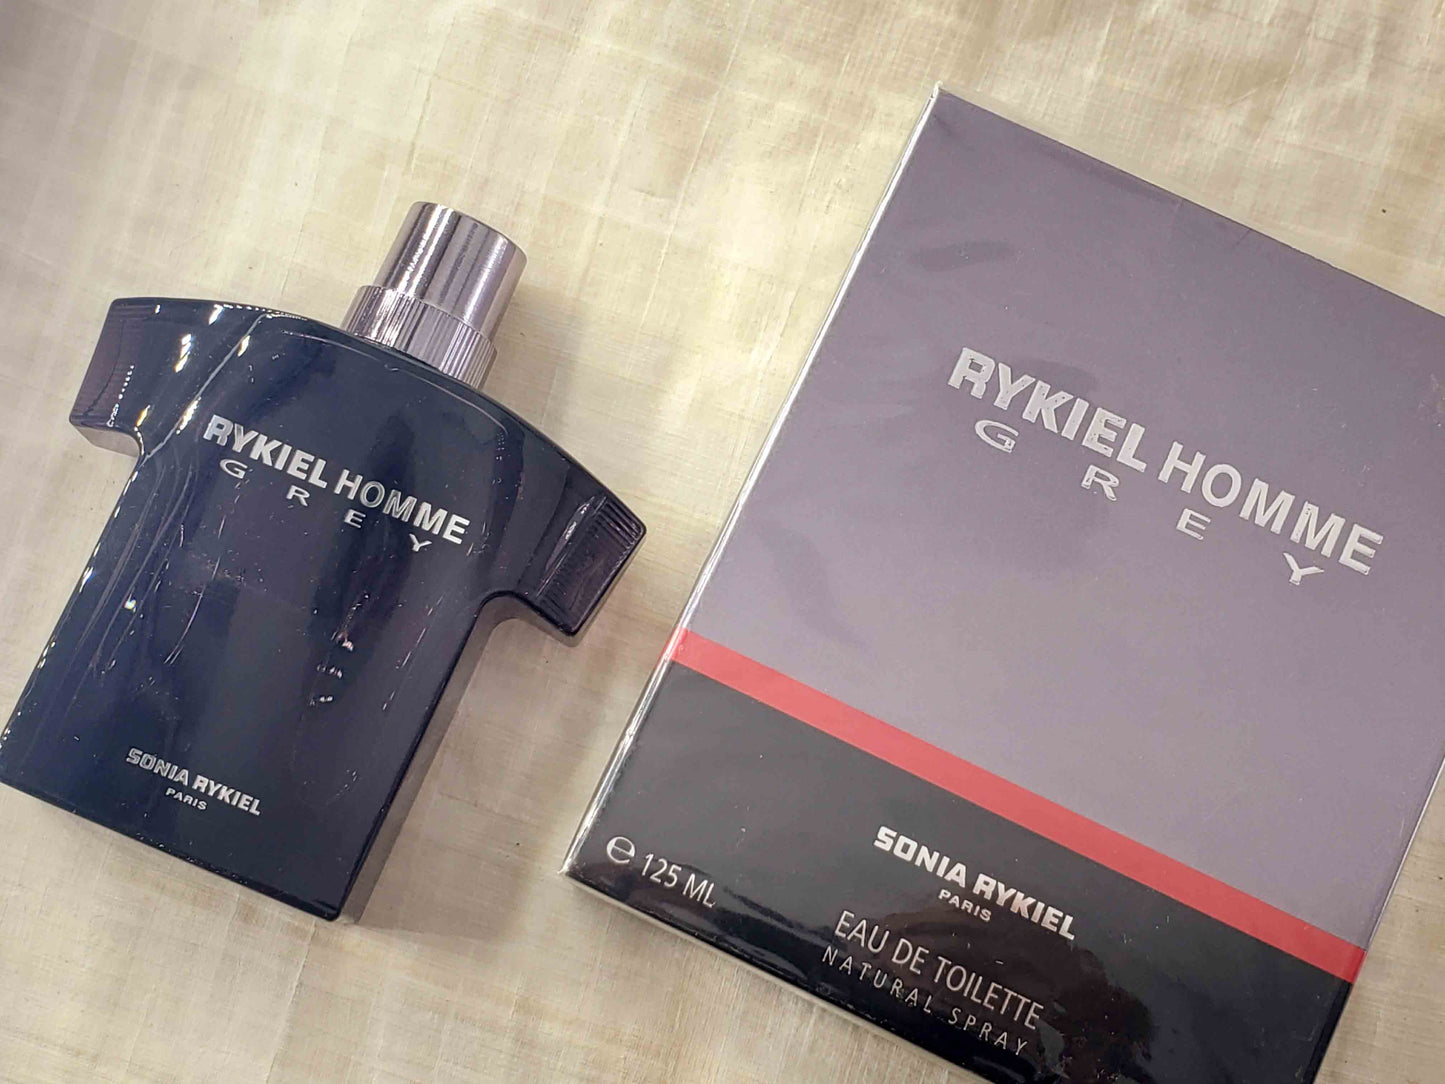 Rykiel Homme Grey Sonia Rykiel for men EDT Spray 125 ml 4.2 oz, Rare, Vintage, Sealed